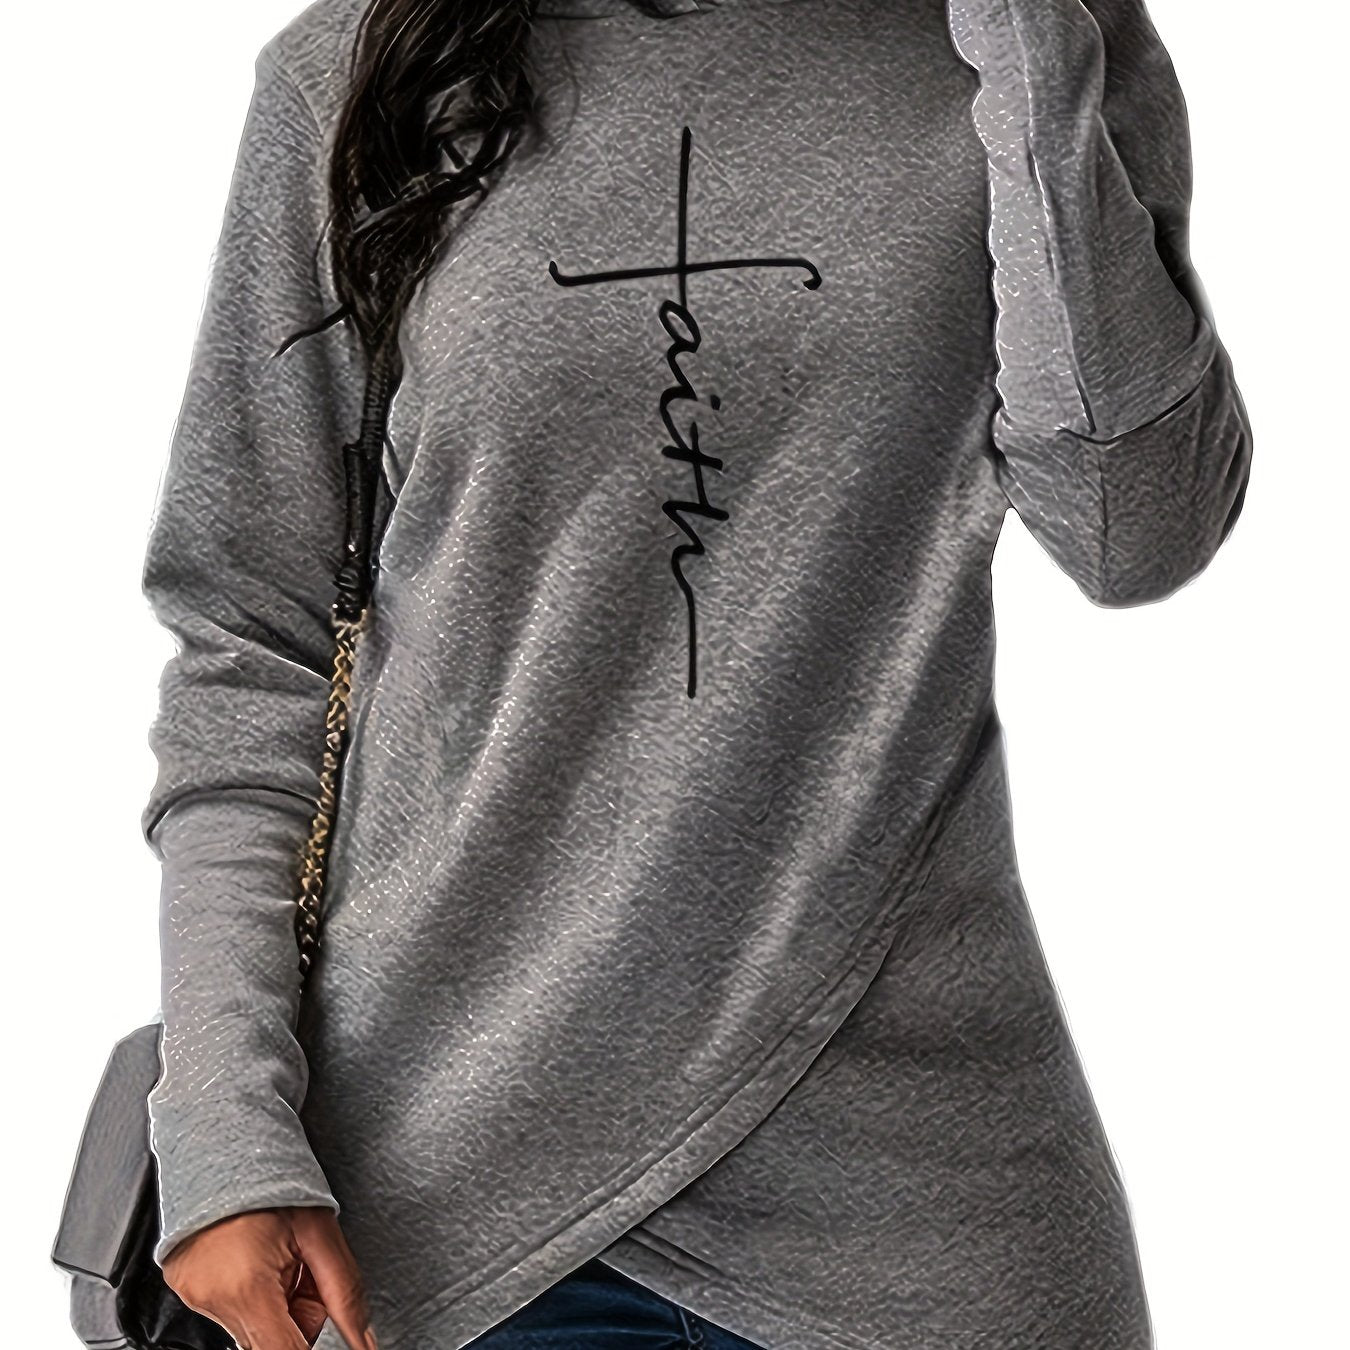 Faith Plus Size Women's Christian Pullover Hooded Sweatshirt claimedbygoddesigns